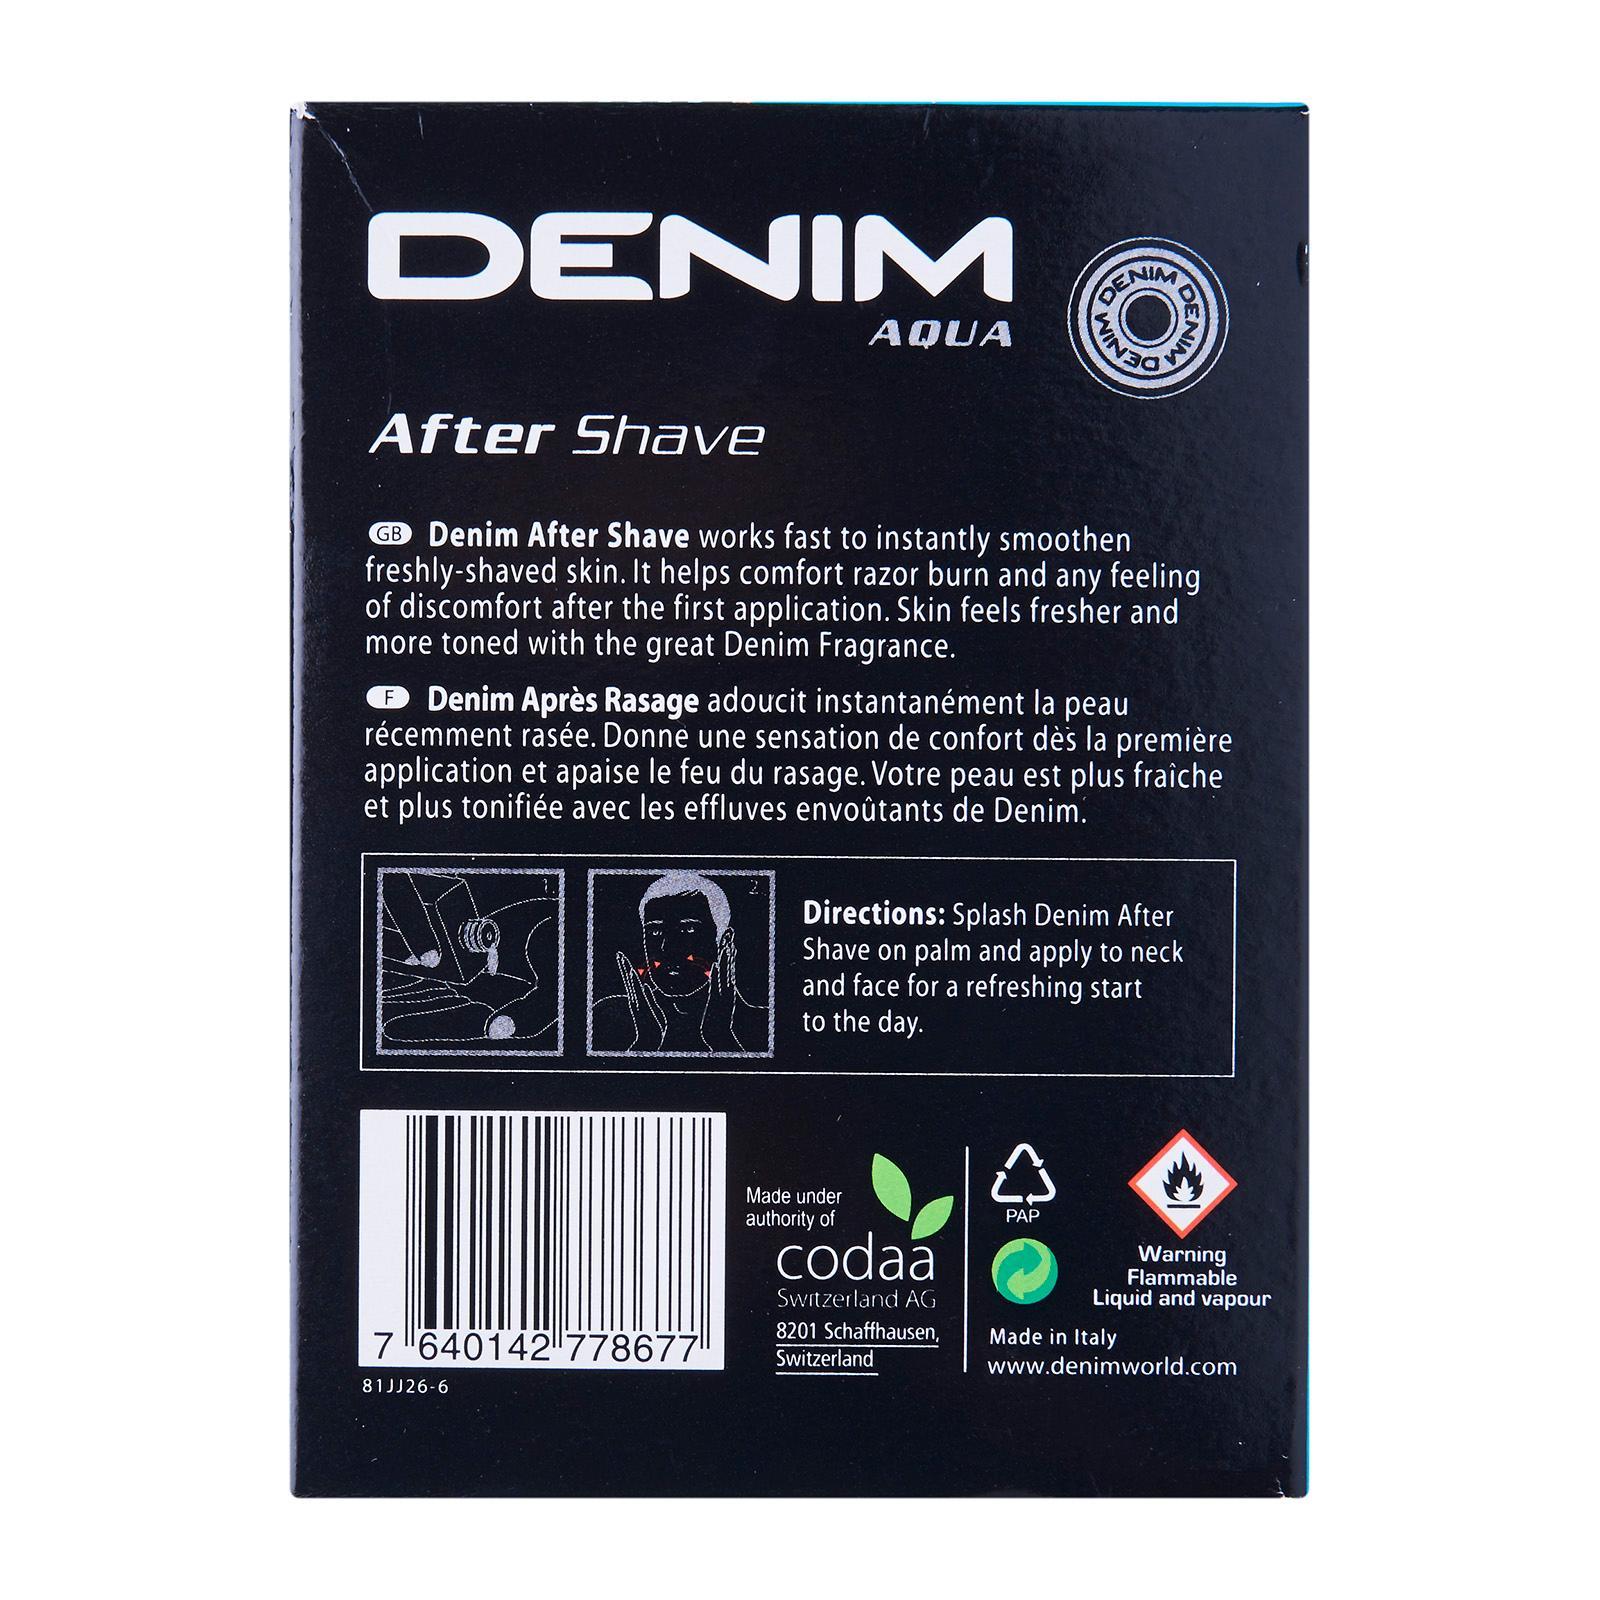 DENIM AFTERSHAVE Lotion 100ml - Choose from Black, Musk, Original Or Aqua  £5.95 - PicClick UK